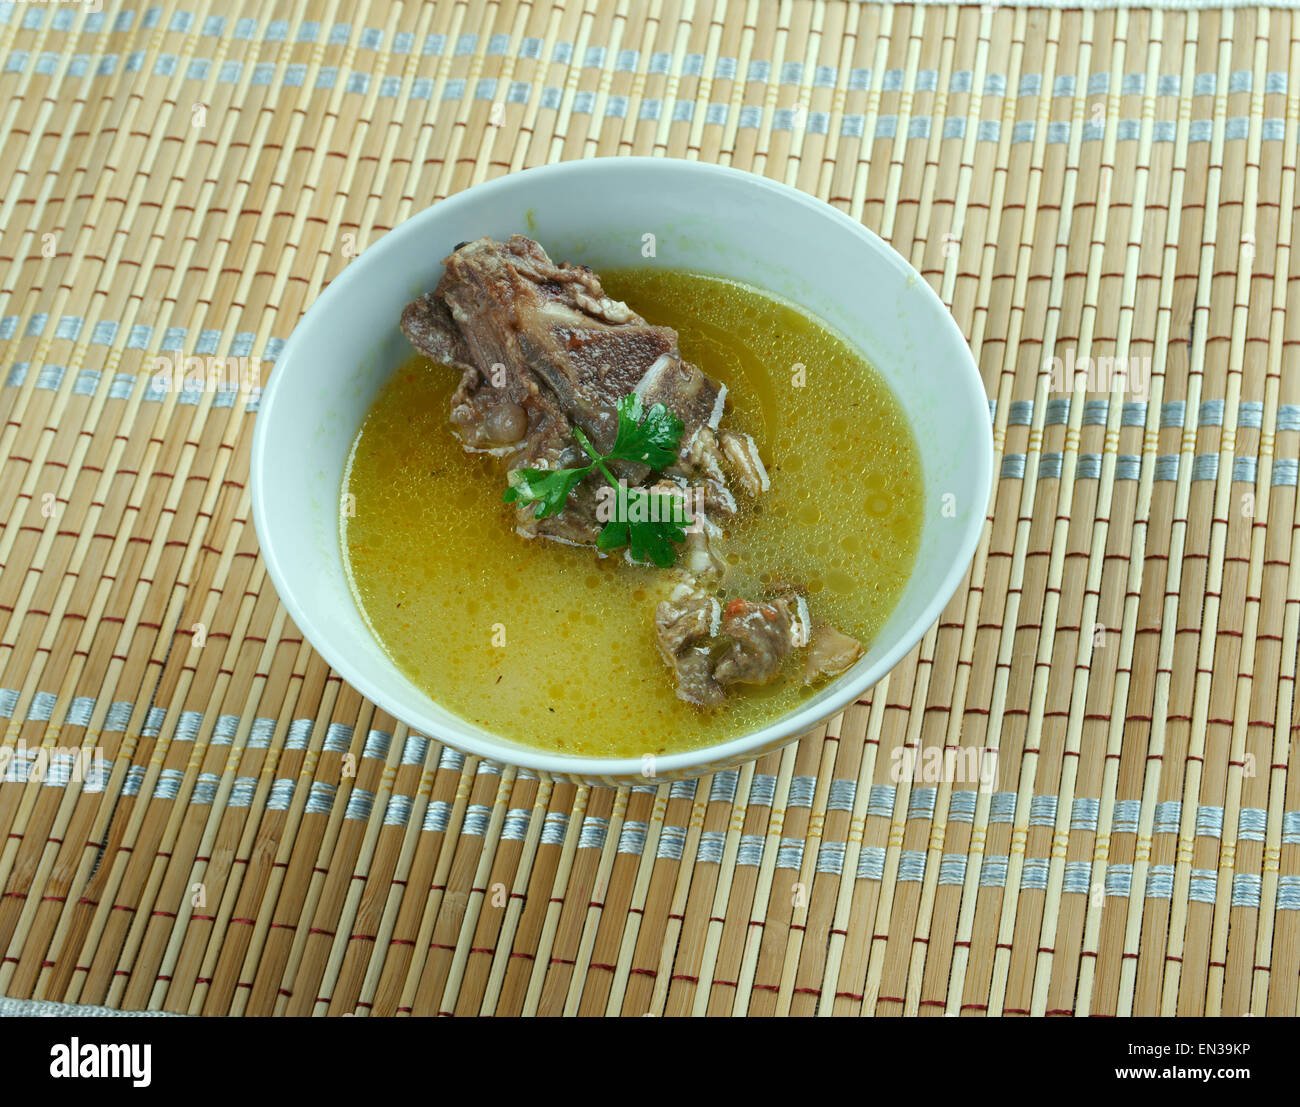 kelle-paca - liquid hot dish, soup, common in Azerbaijan, Iran and Turkey. Stock Photo